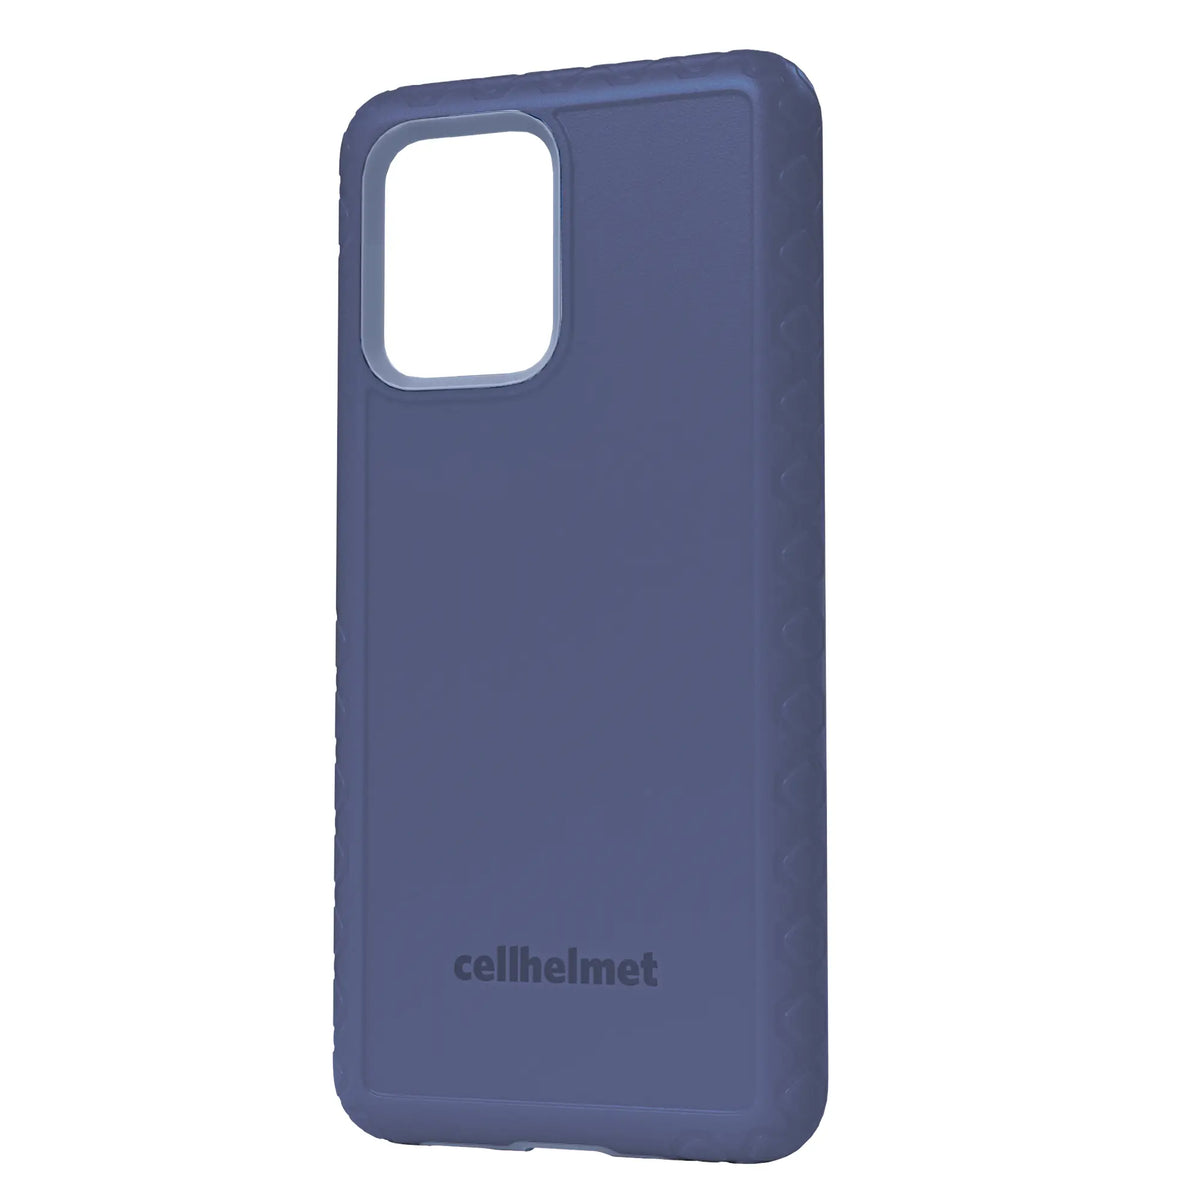 Blue cellhelmet Customizable Case for Galaxy S20 Plus